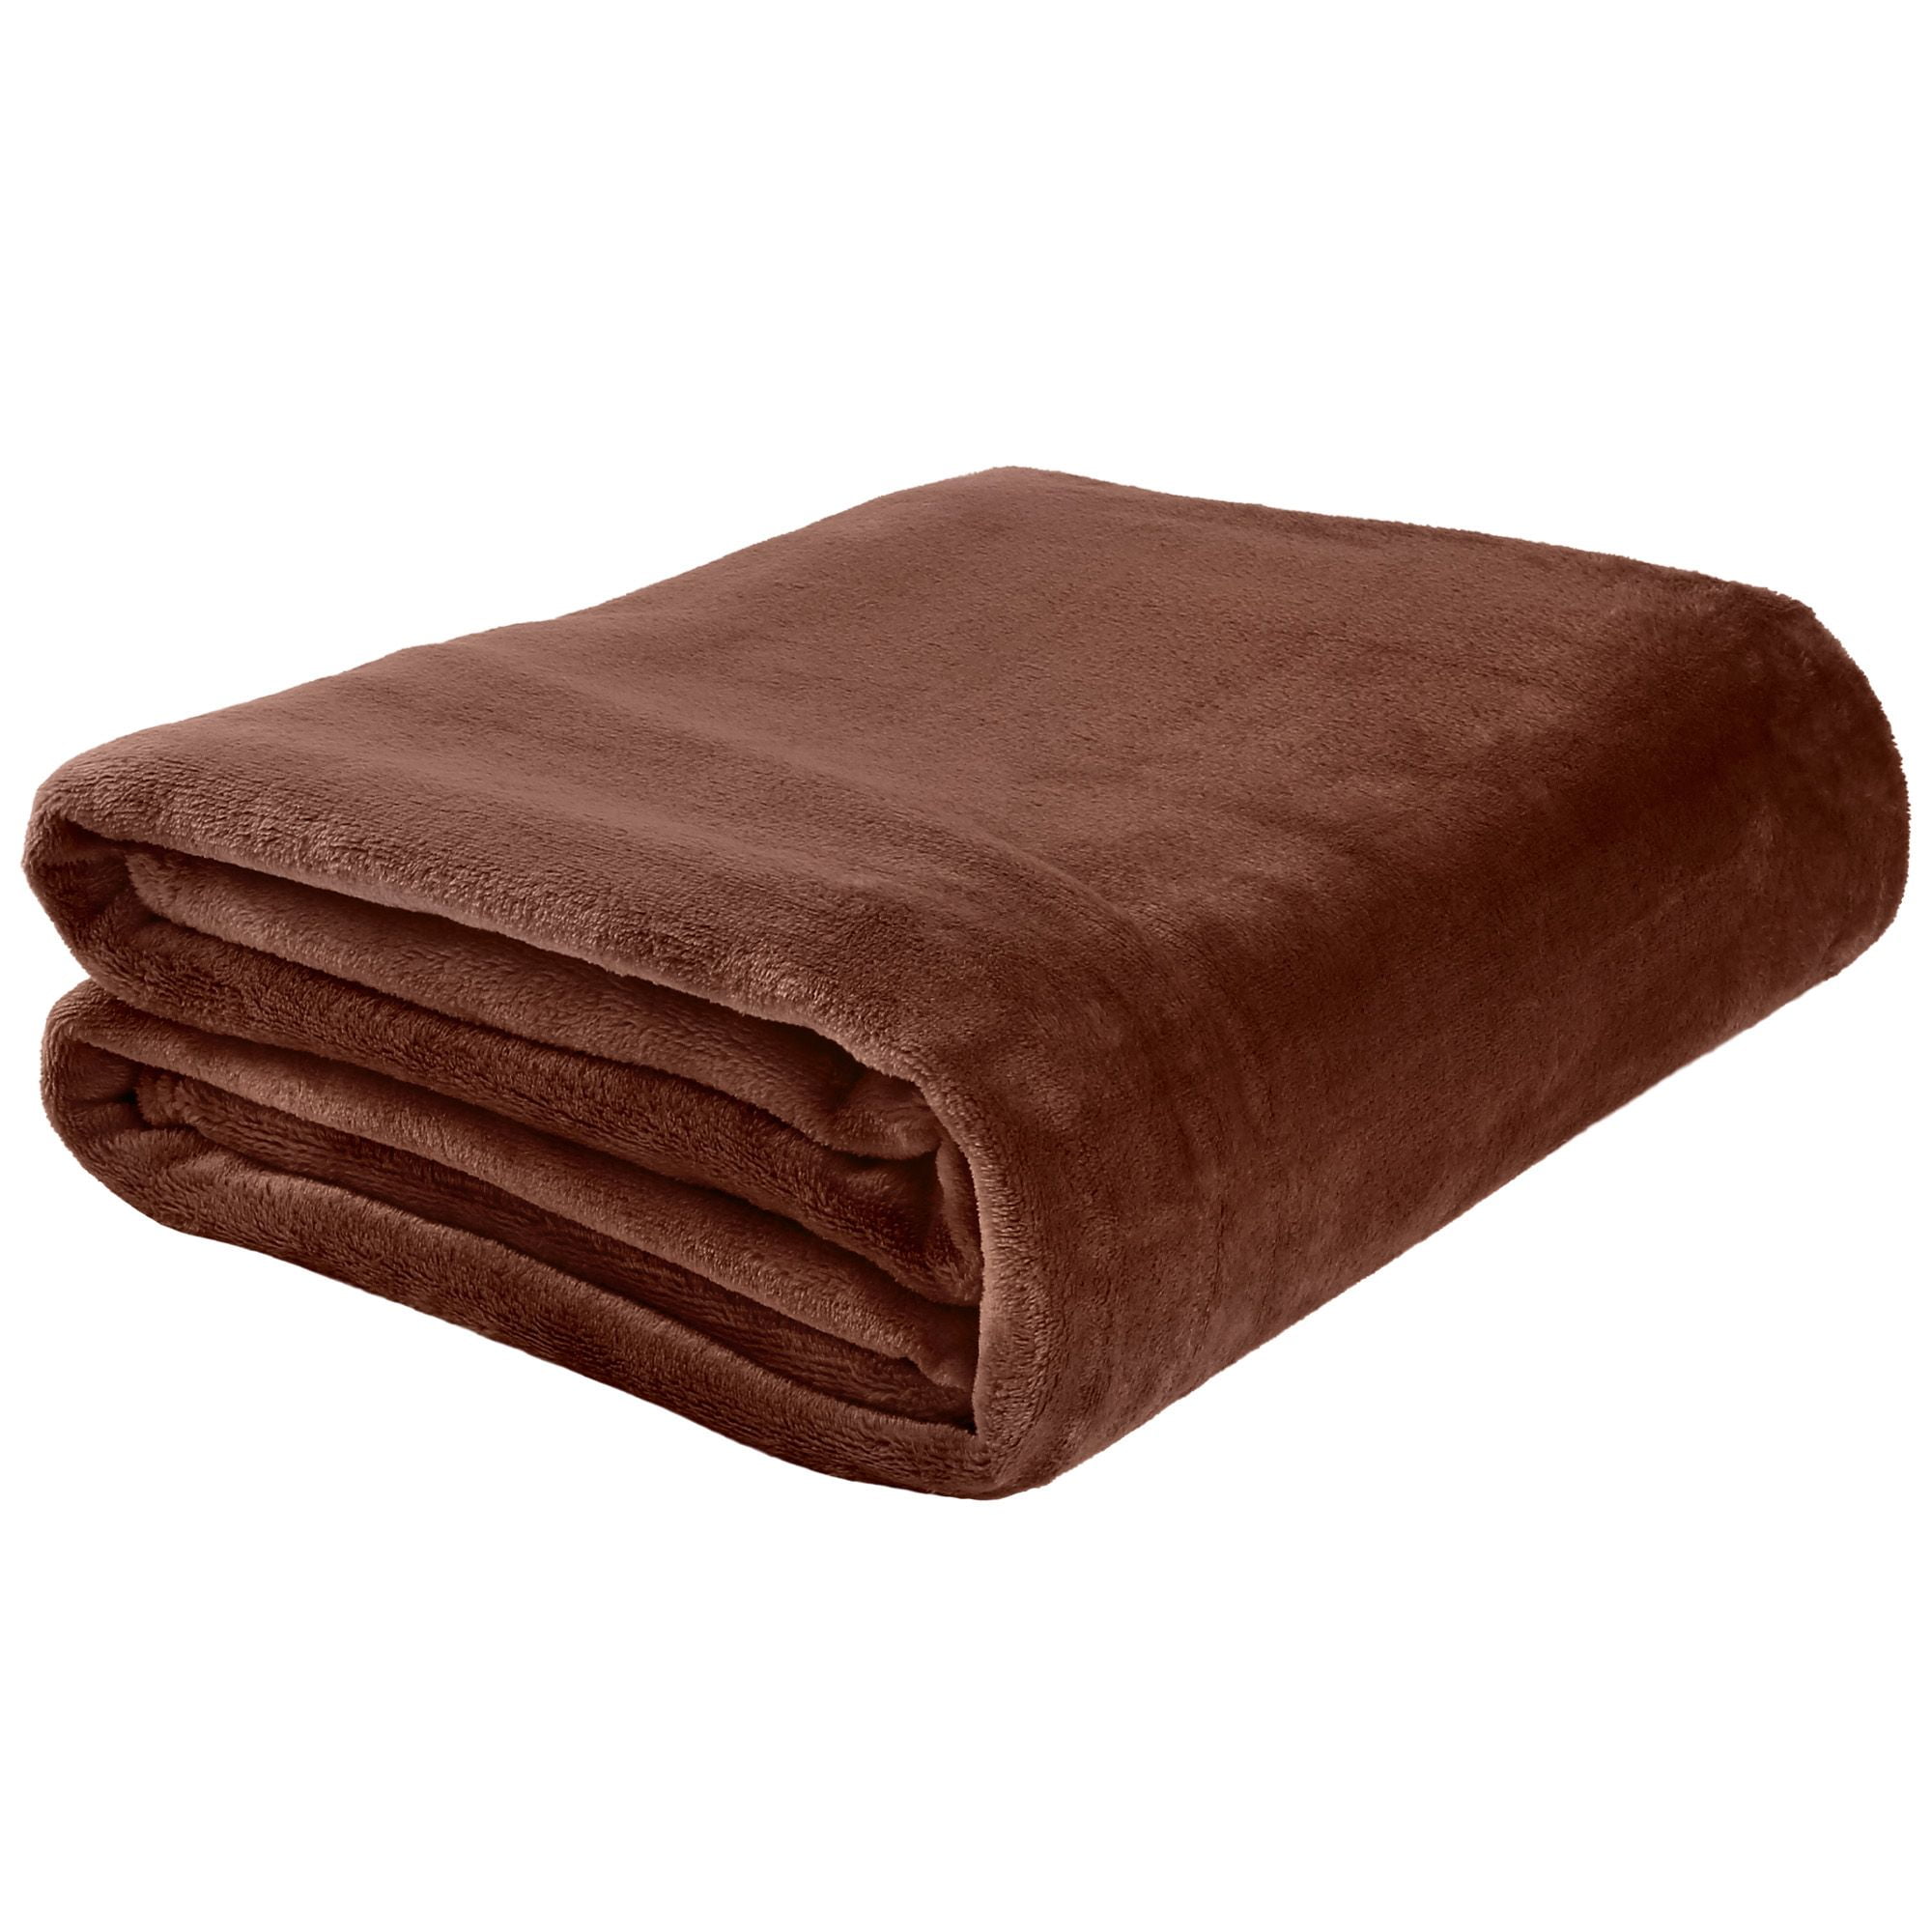 60x80 Inches Throw Blanket Brown Twin Size Fuzzy Fleece Blanket Super